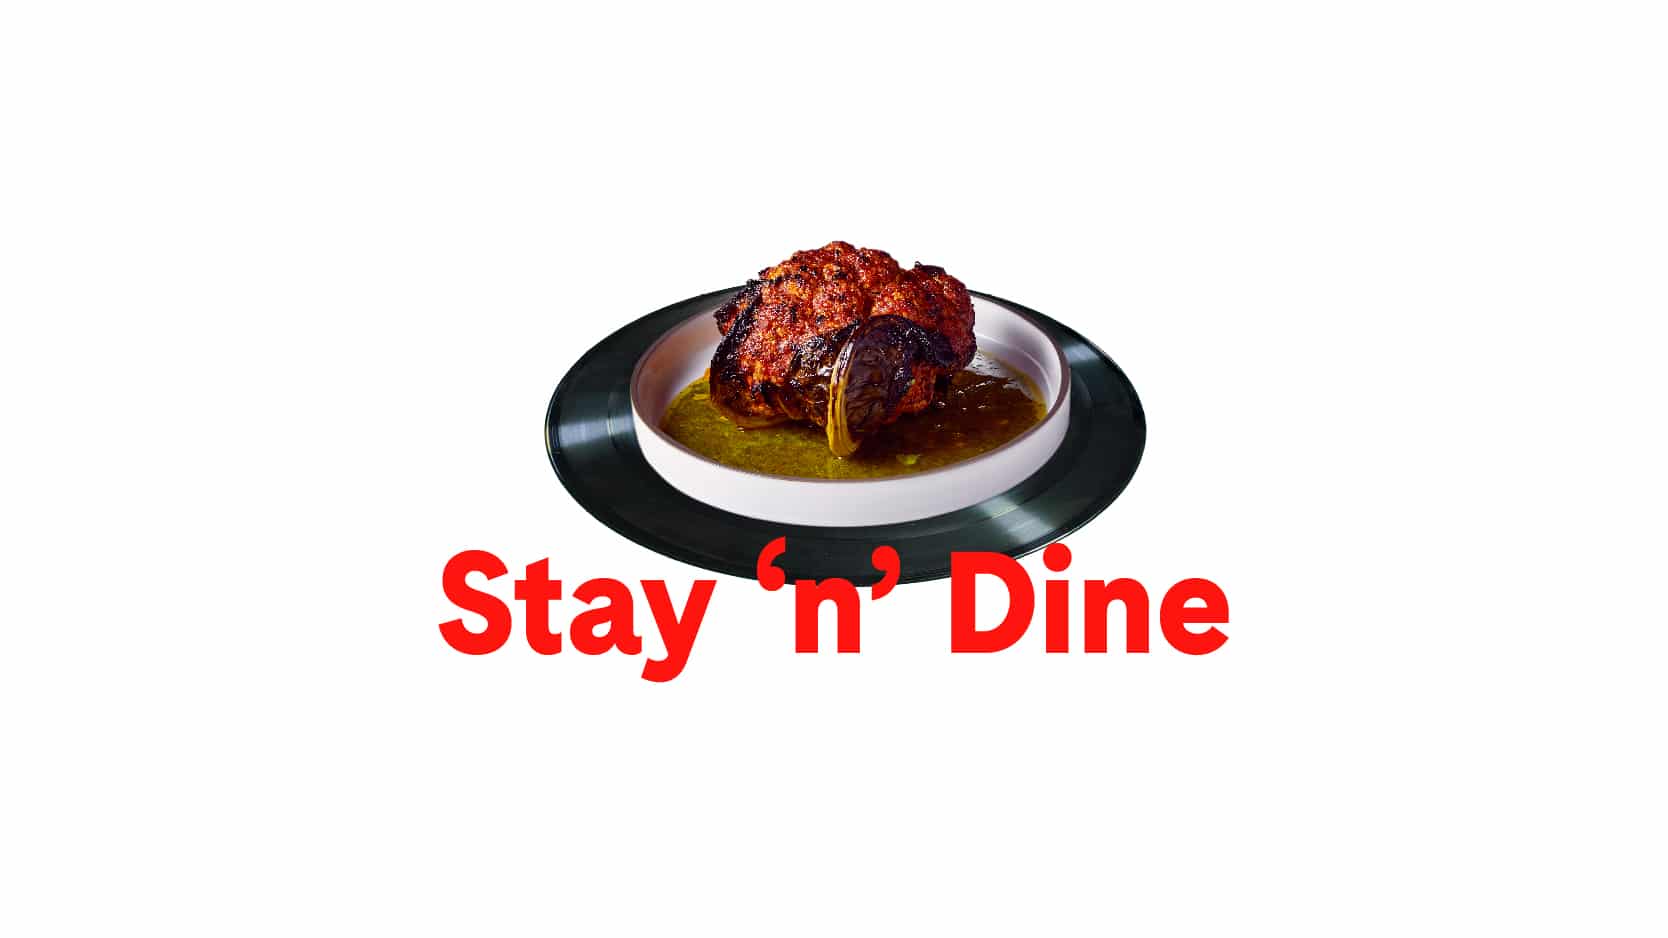 Stay n Dine Offer